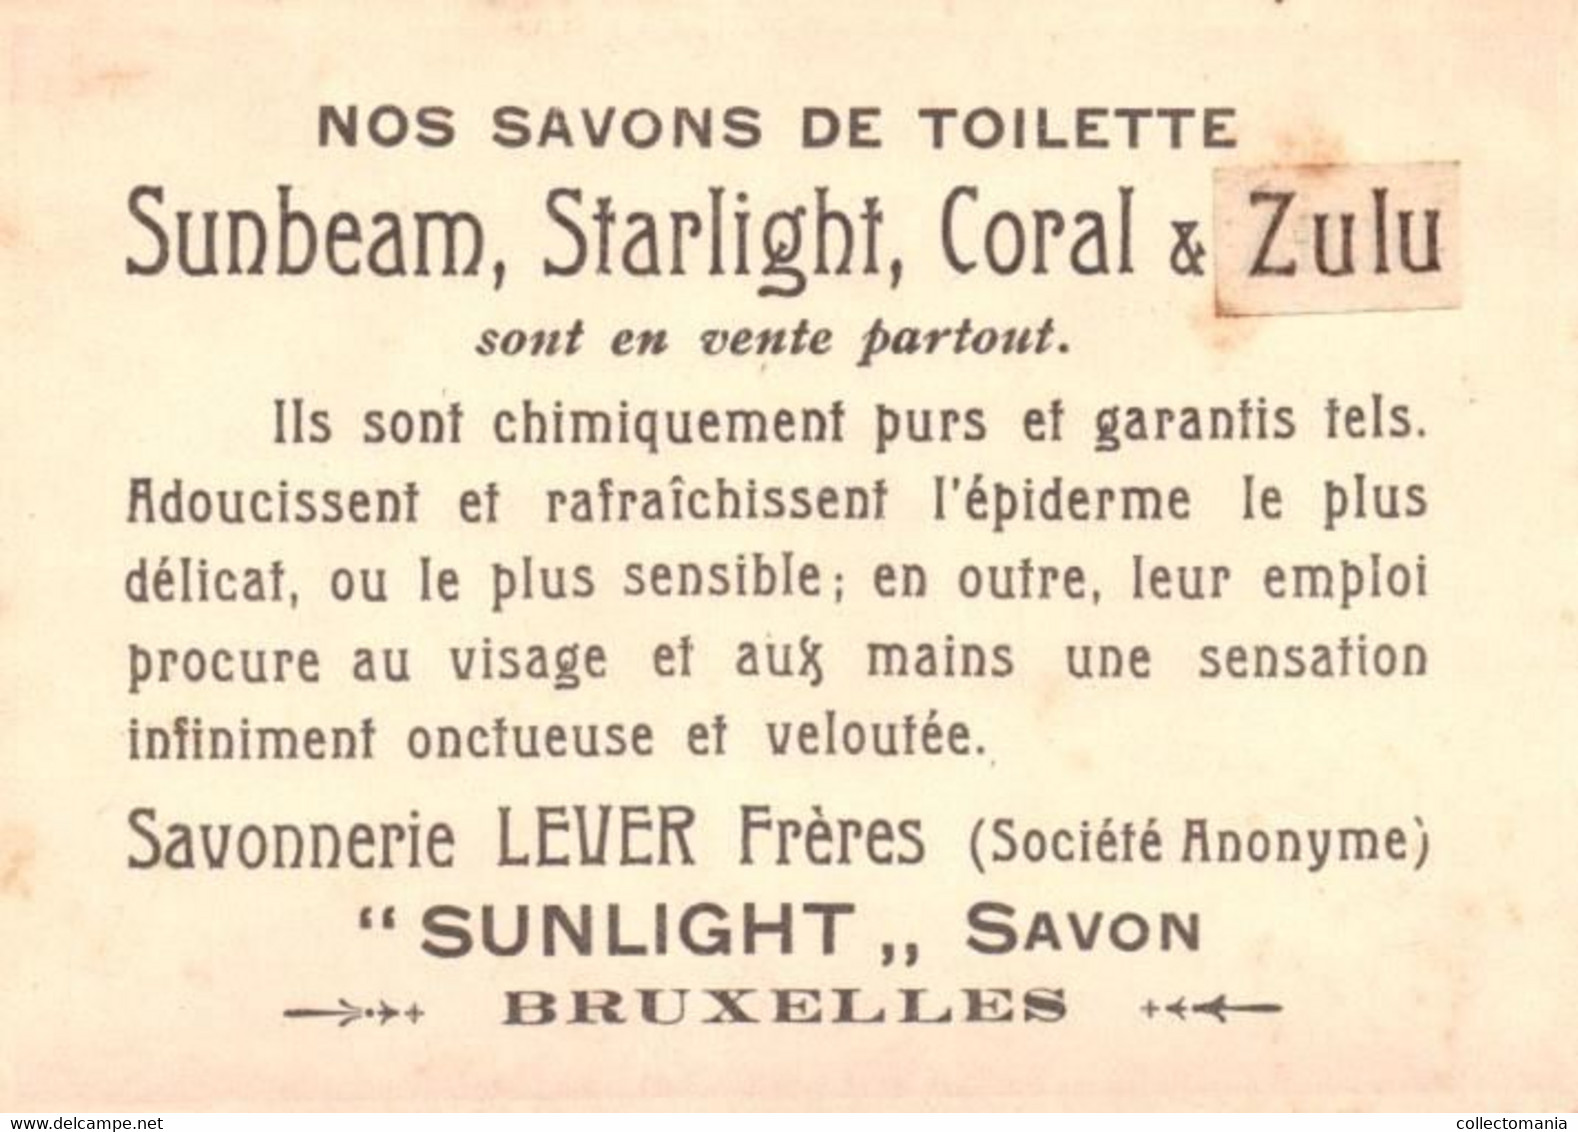 6 Cards Sunlight Zeep Savon Royal  de Toilette BRUXELLES  Zulu Coral Starlight  Japanese scenes